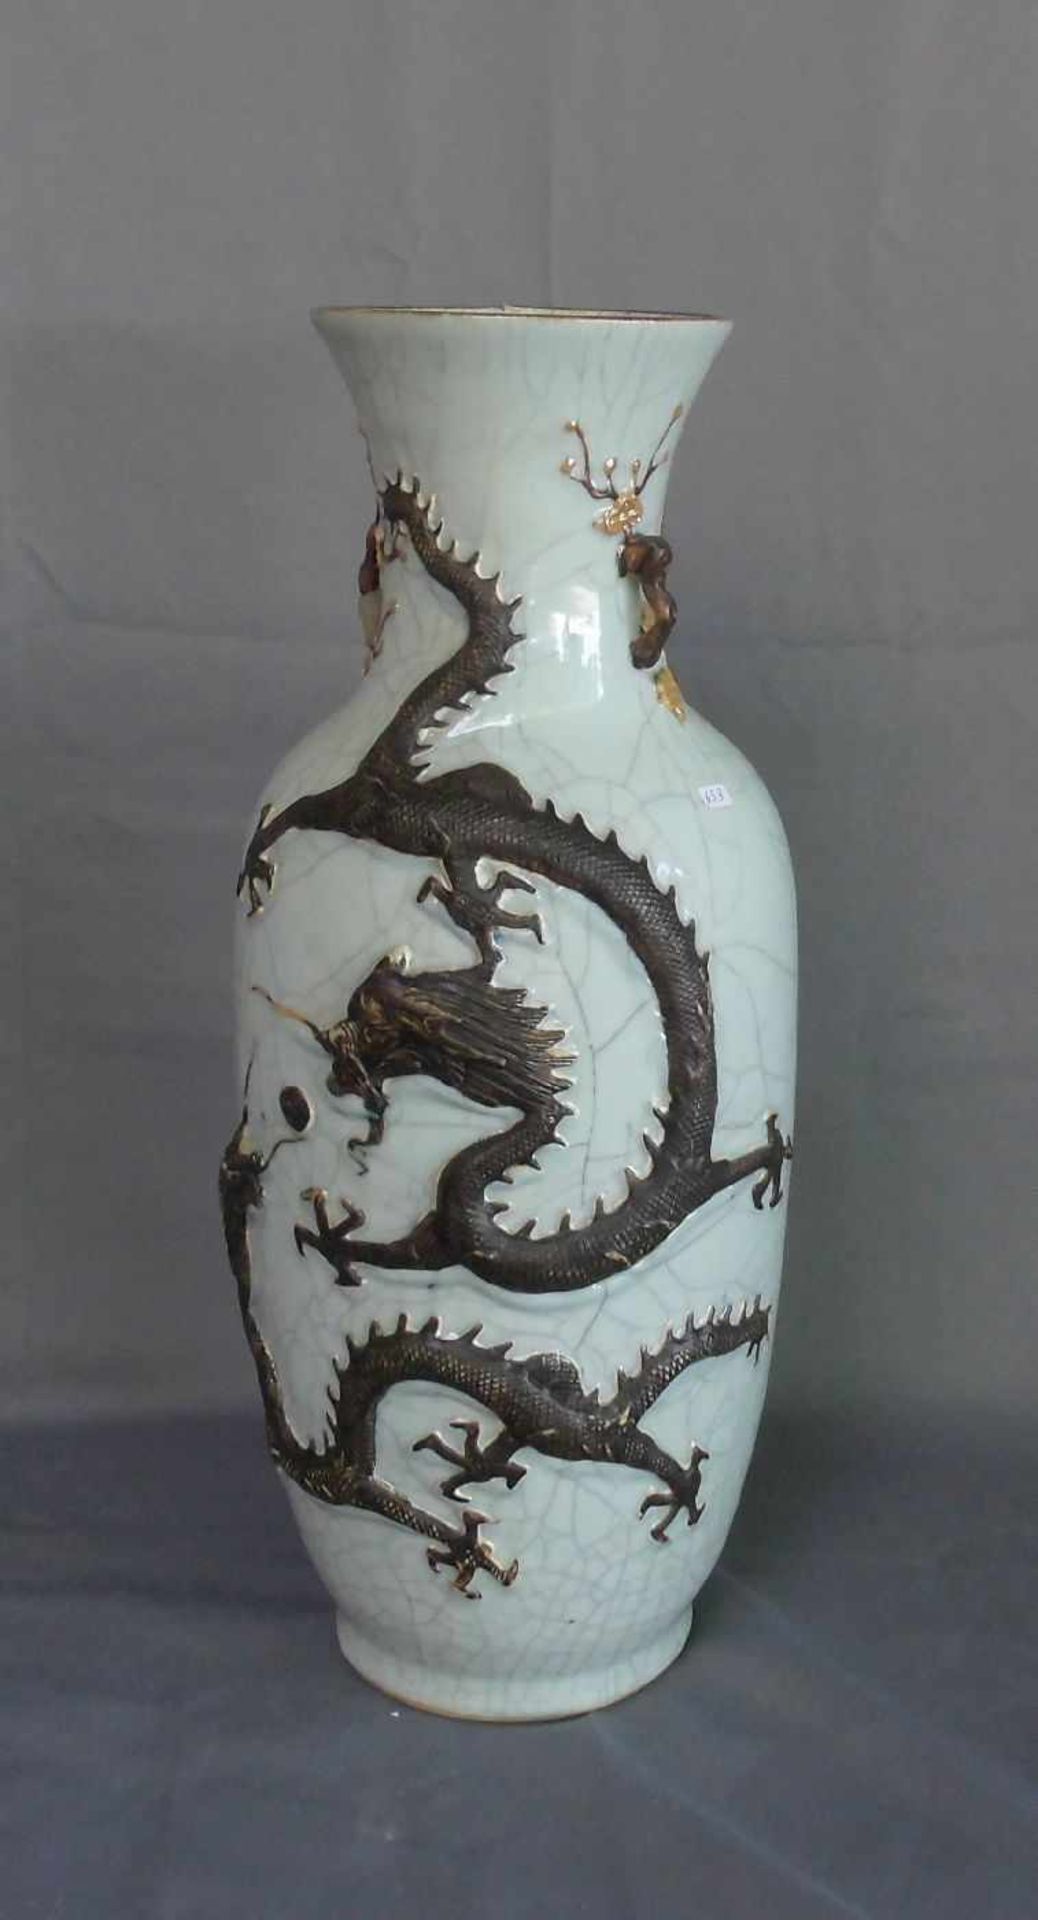 GROSSE VASE / DRACHENVASE / vase, Porzellan, China, Marke wohl "Chenghua Nian Zhi". Heller